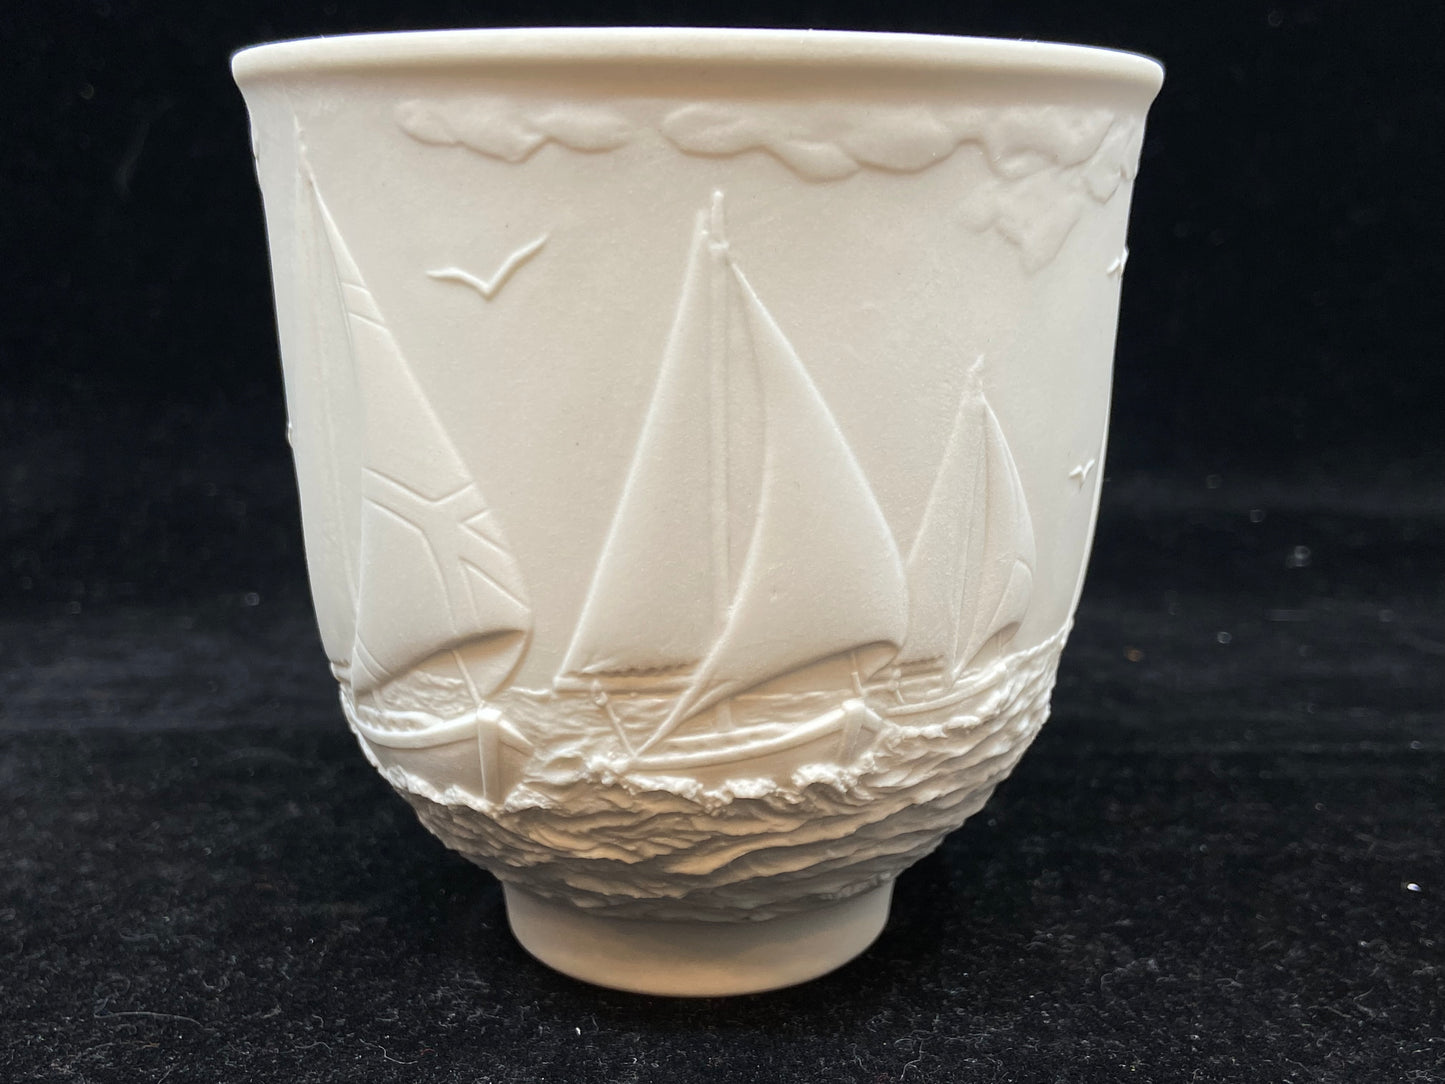 Lladro "Sailing the Seas" Collectors Cup (26511)